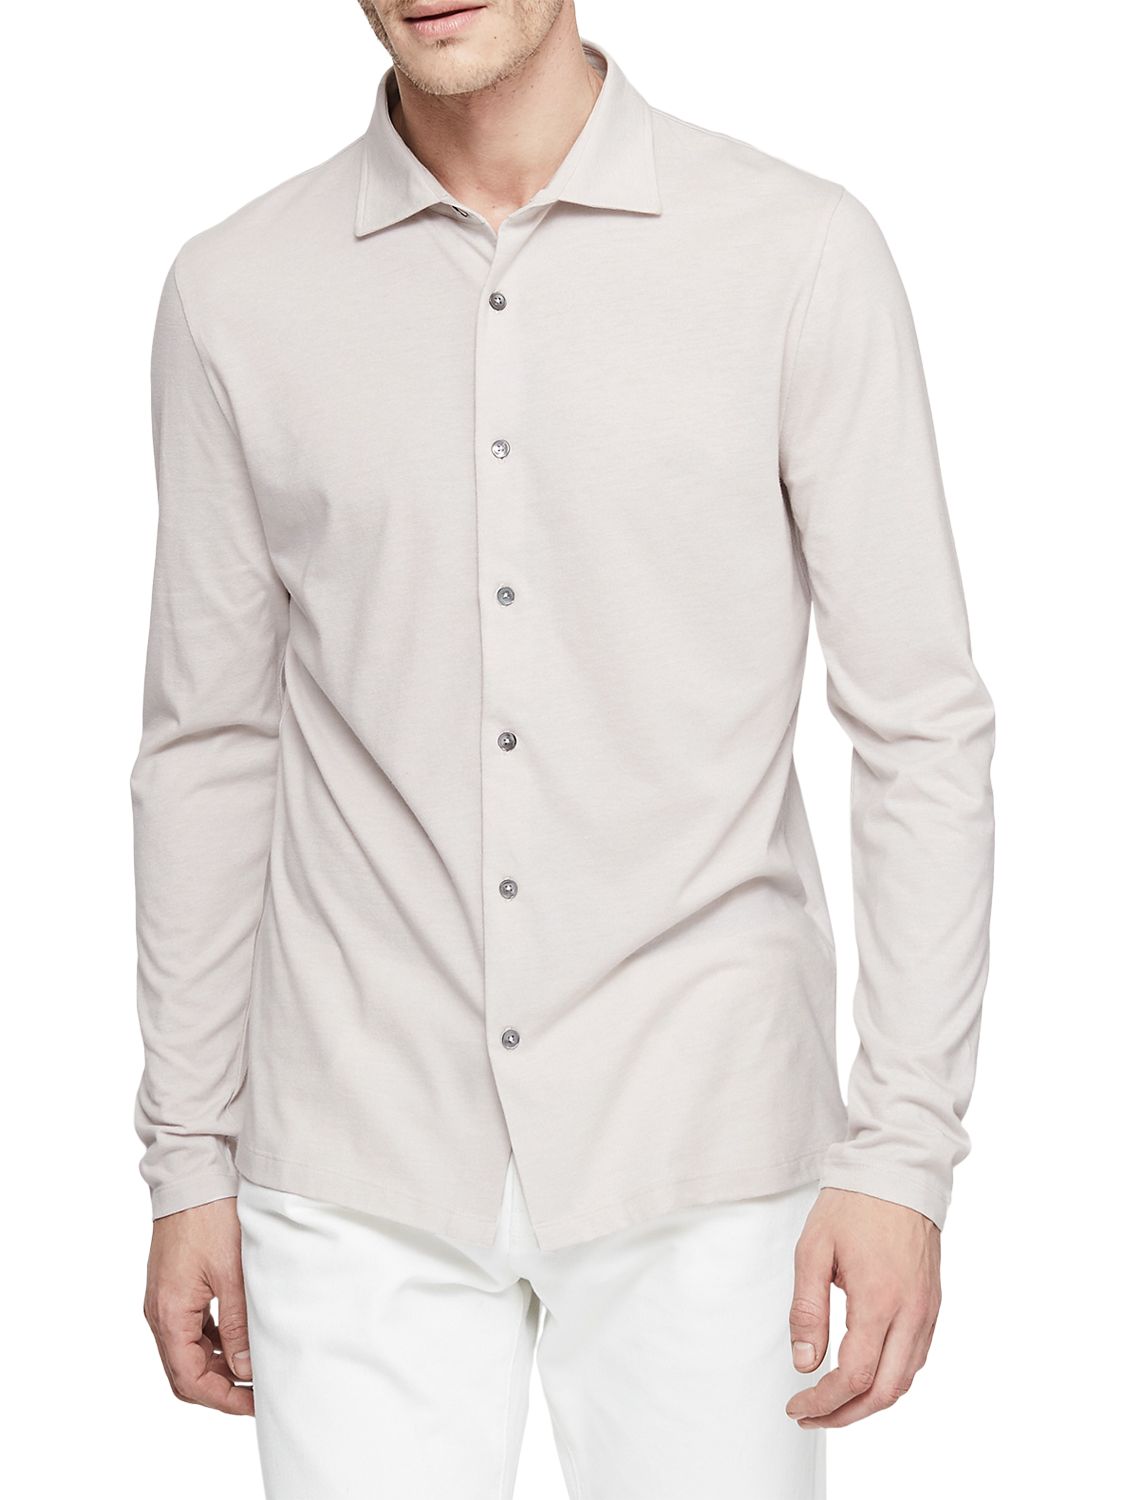 Reiss Oliver Jersey Shirt, Soft Grey, M